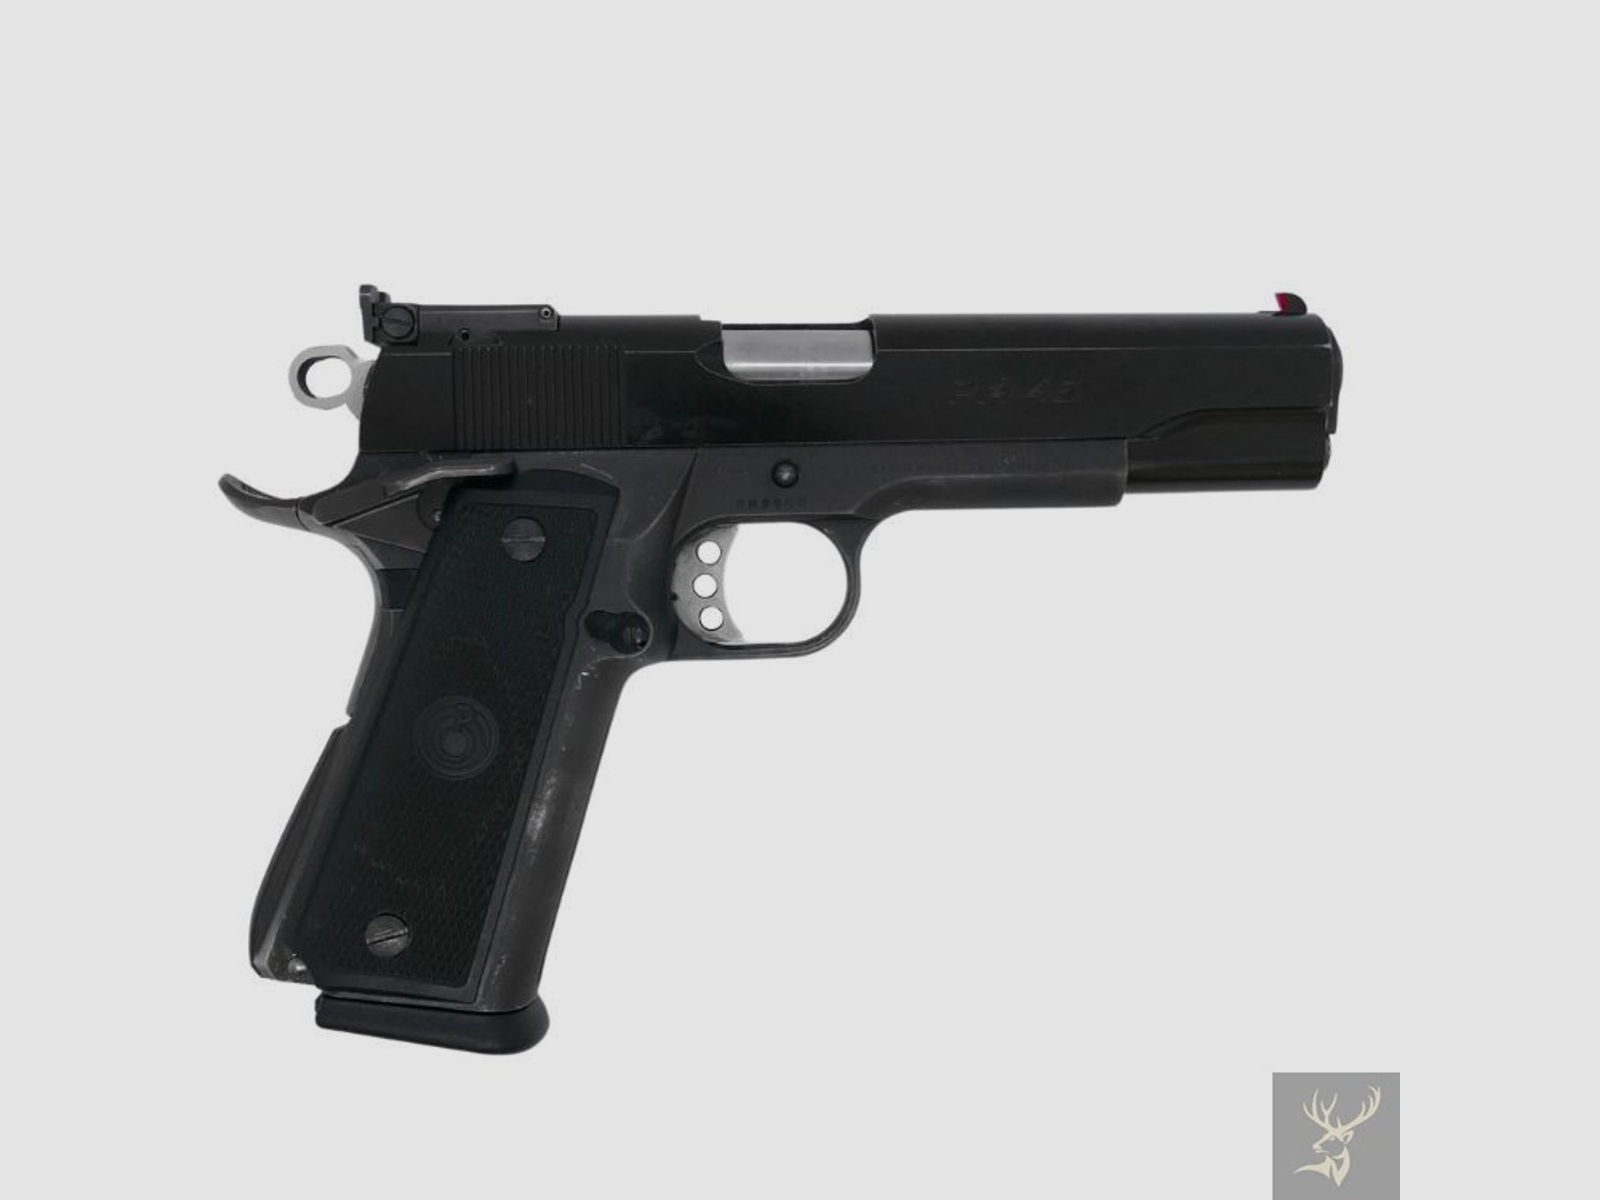 Para-Ordnance Pistole P14-45 .45 ACP